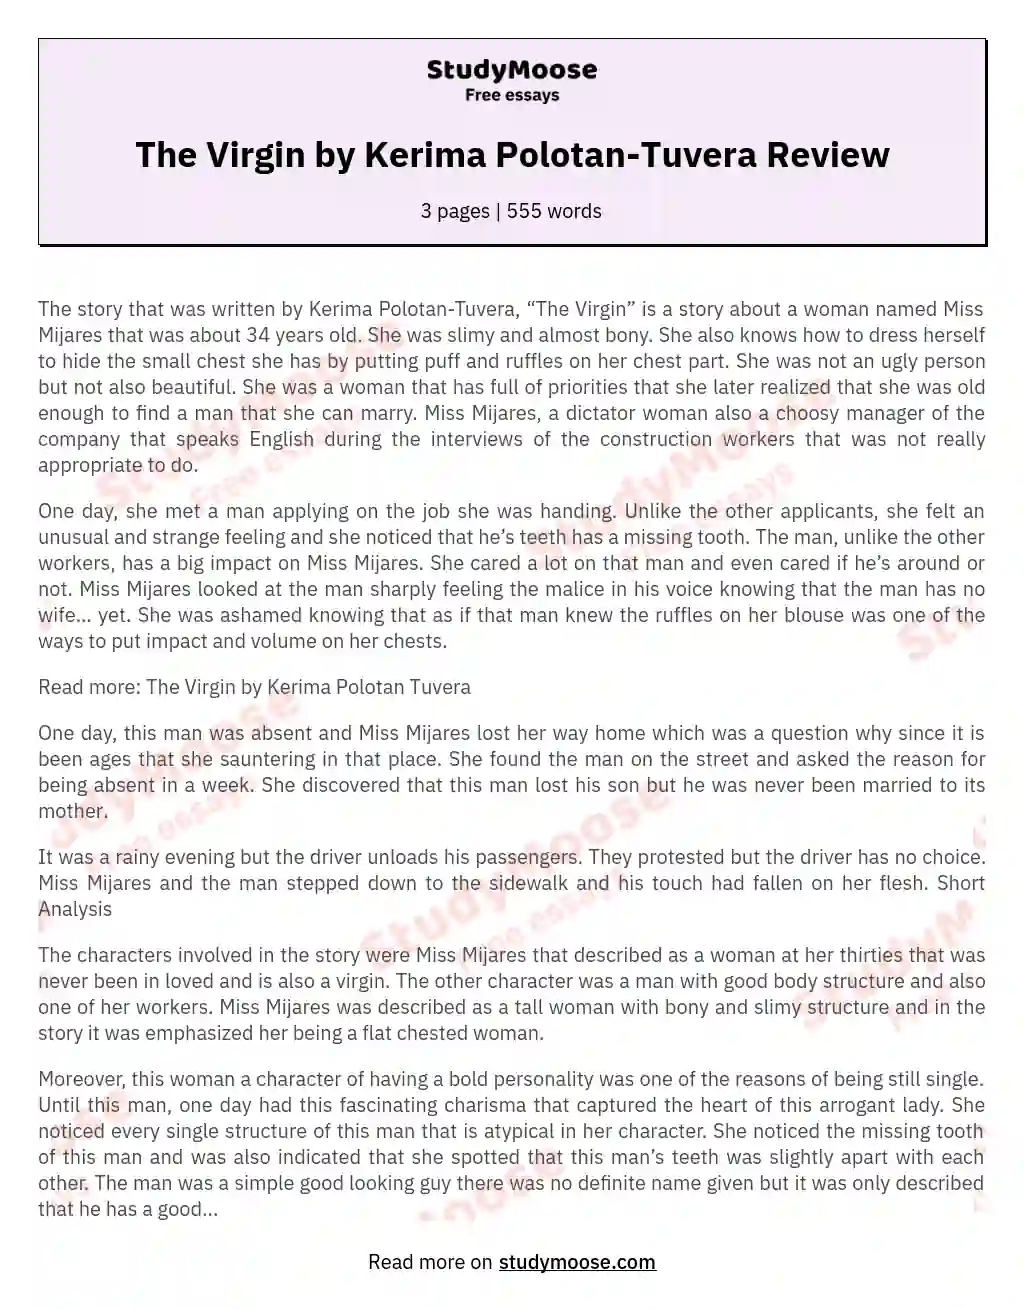 The Virgin by Kerima Polotan-Tuvera Review essay